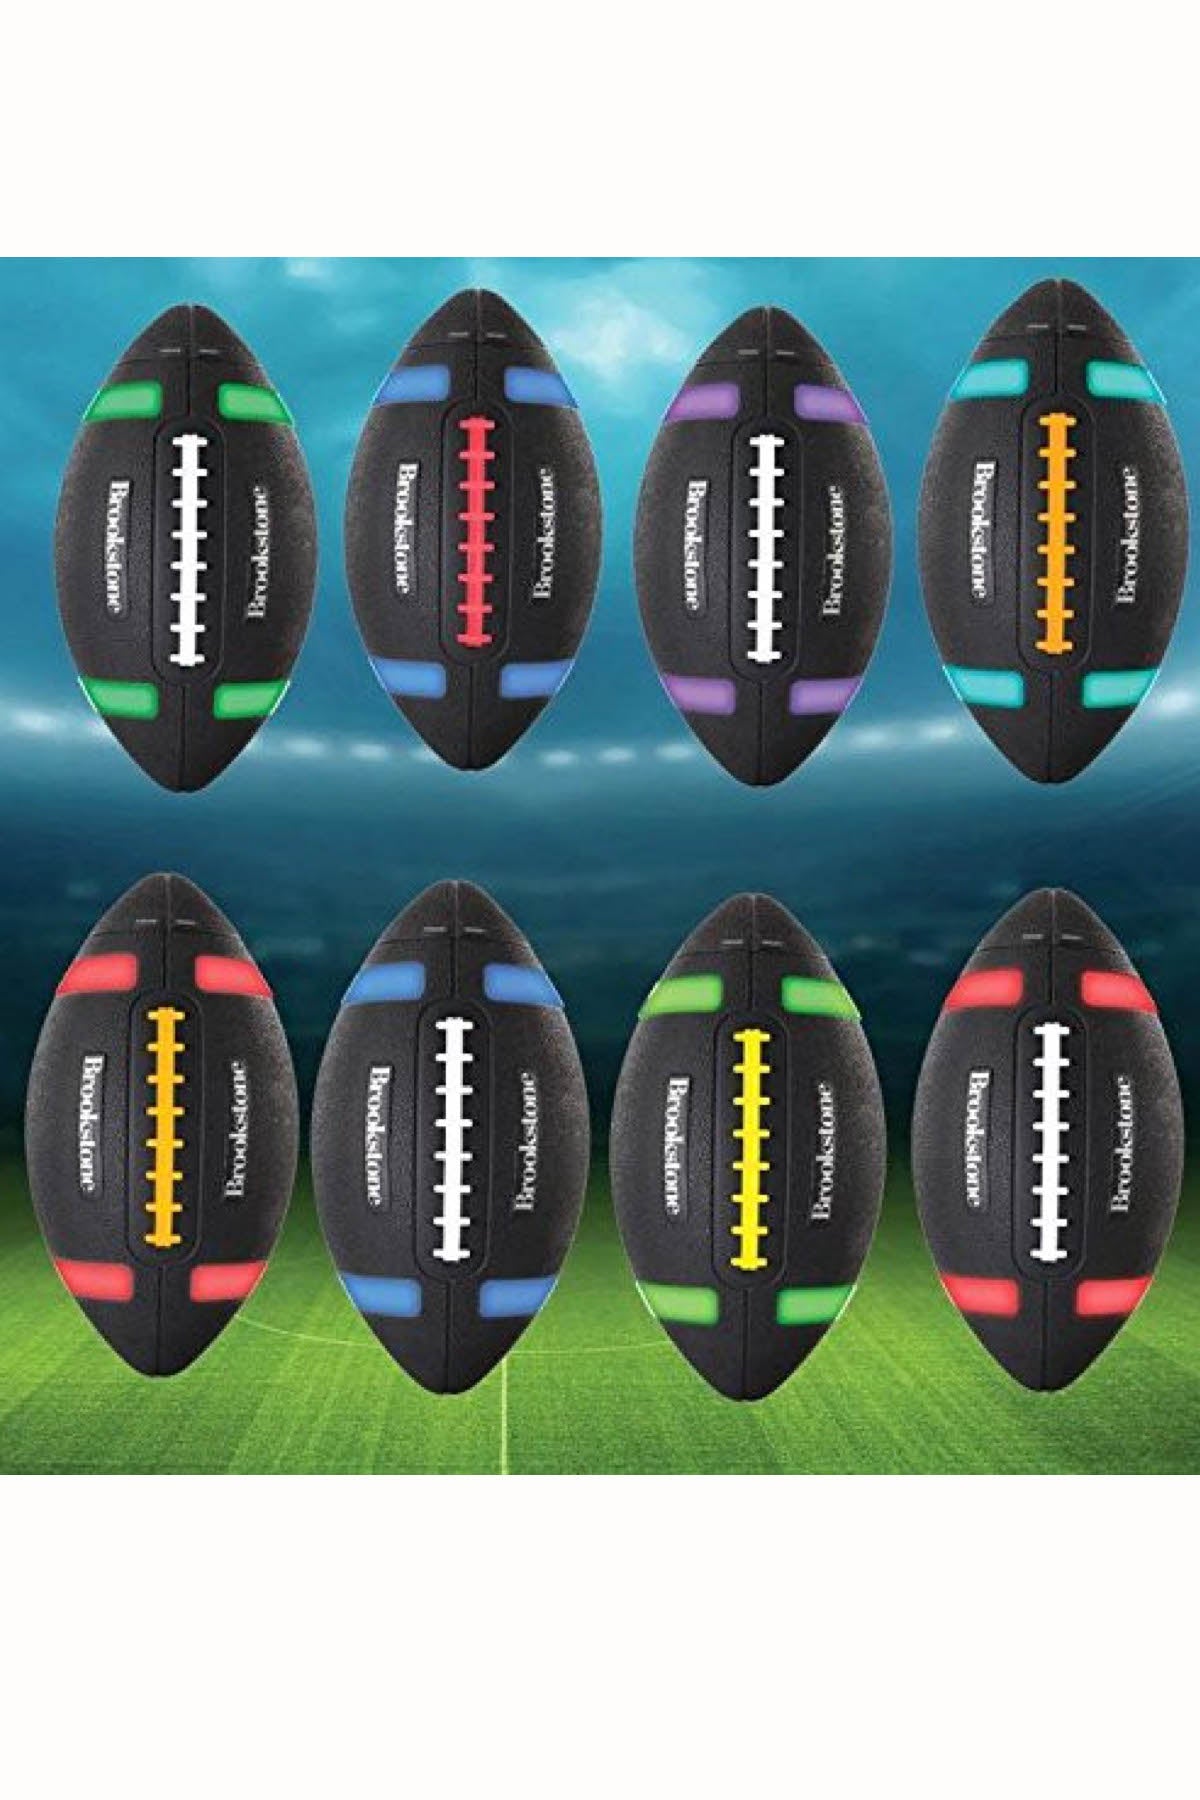 Brookstone Multi-Color Rechargable Light-Up Gronkball Football Bluetooth Speaker